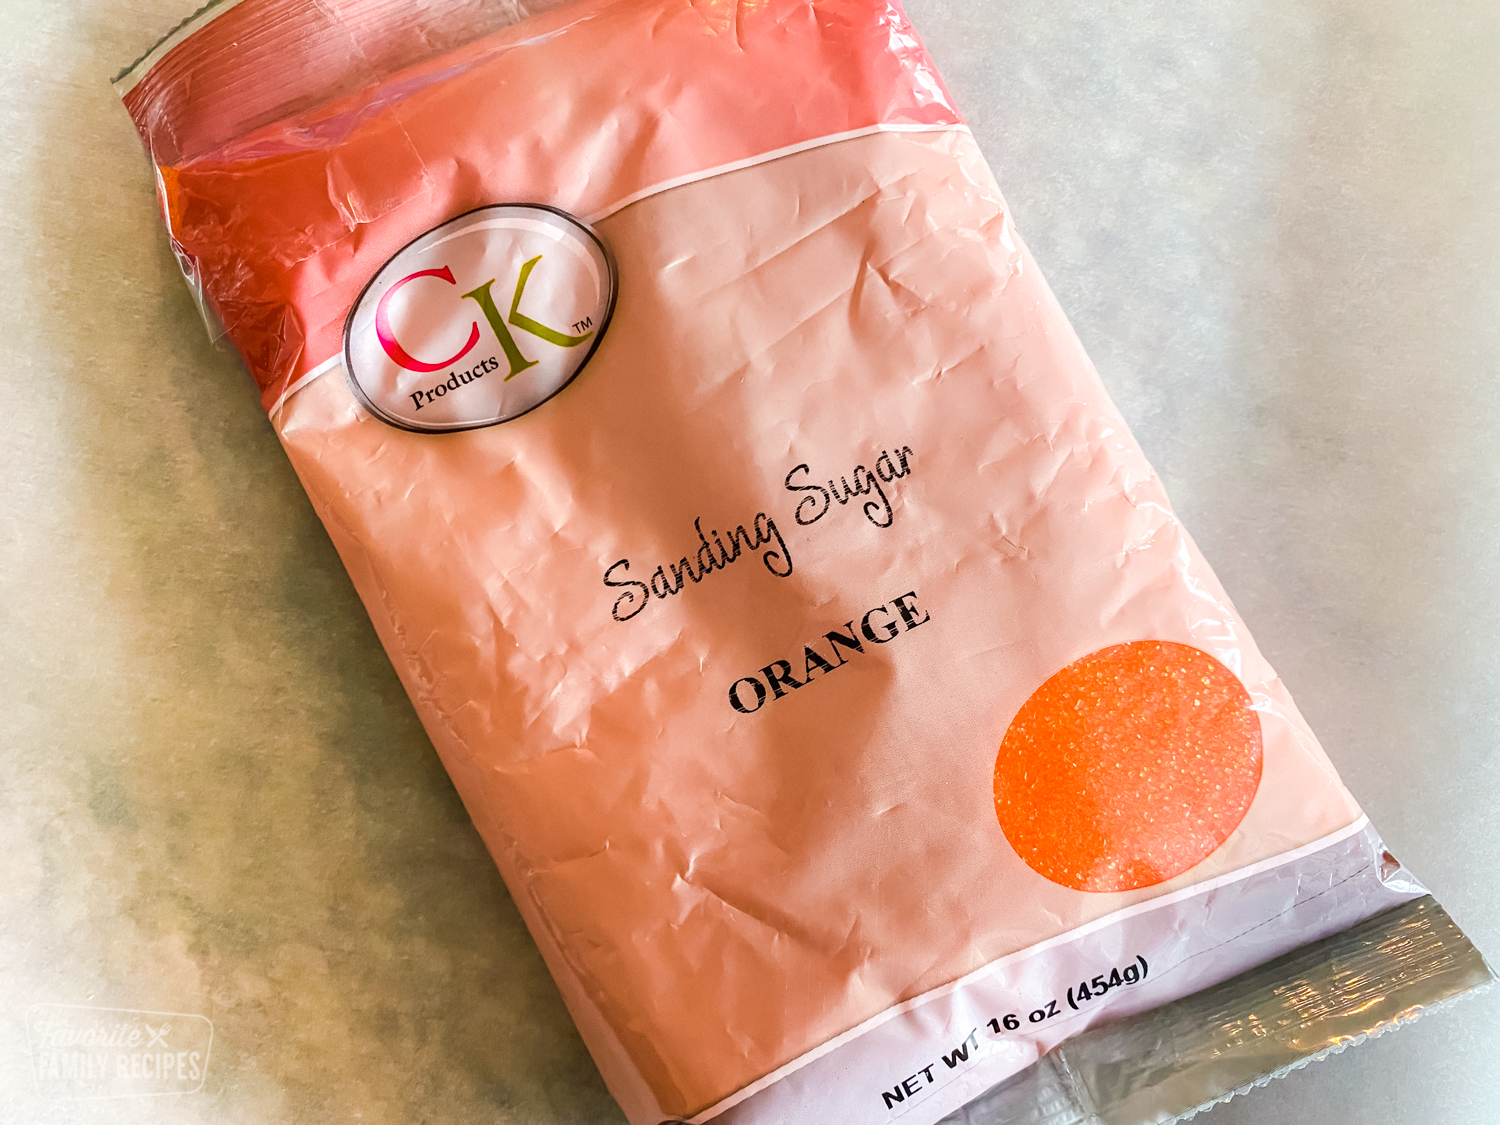 Bag of orange sanding sugar